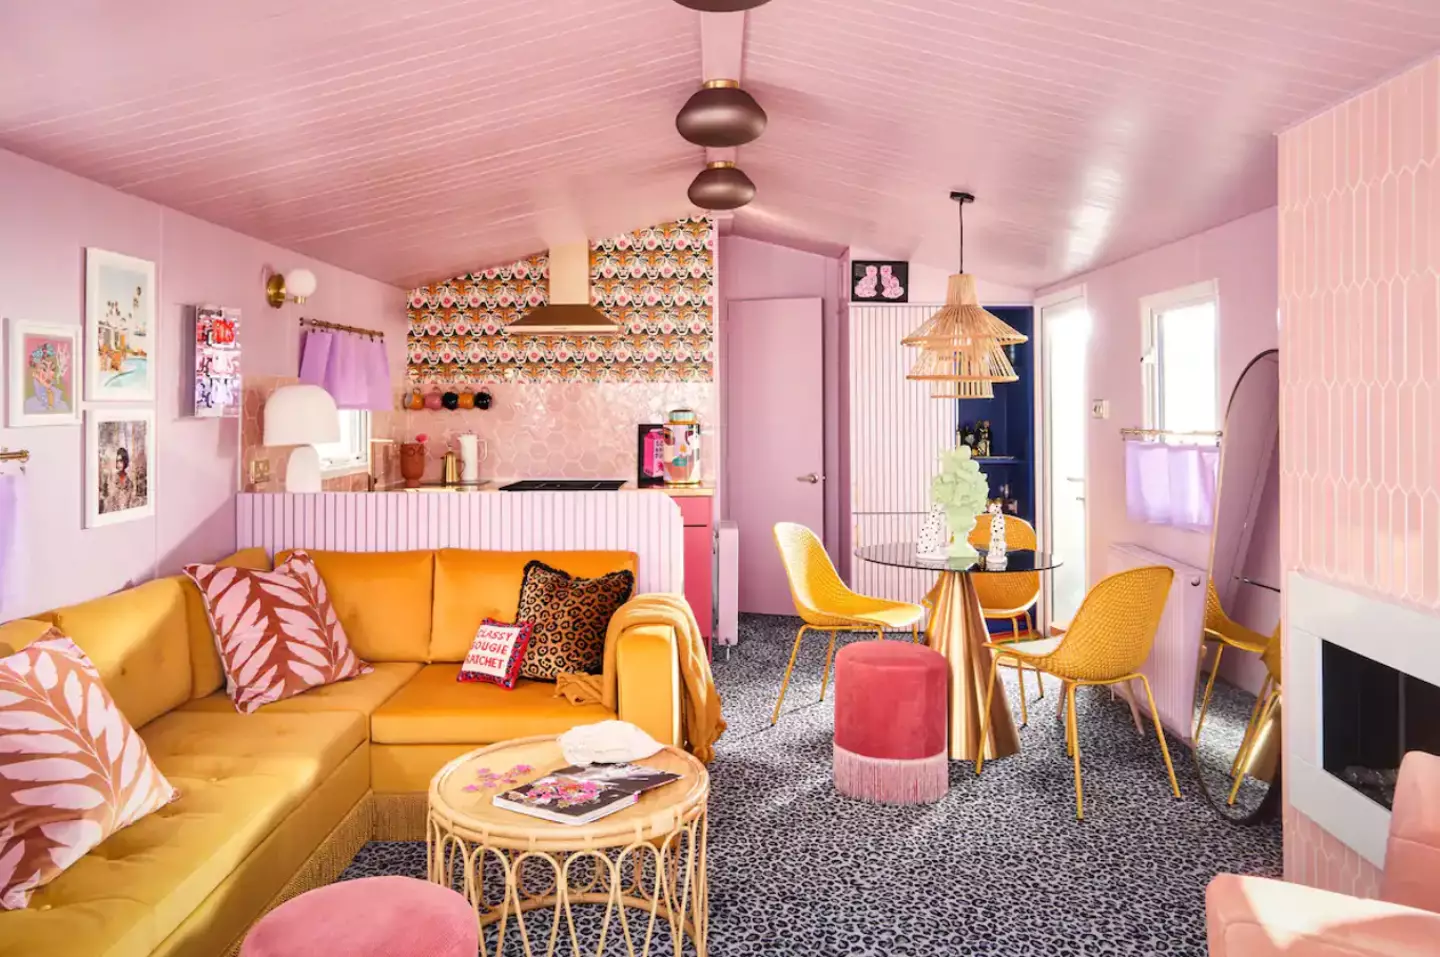 This caravan looks like a Barbie Dreamhouse!